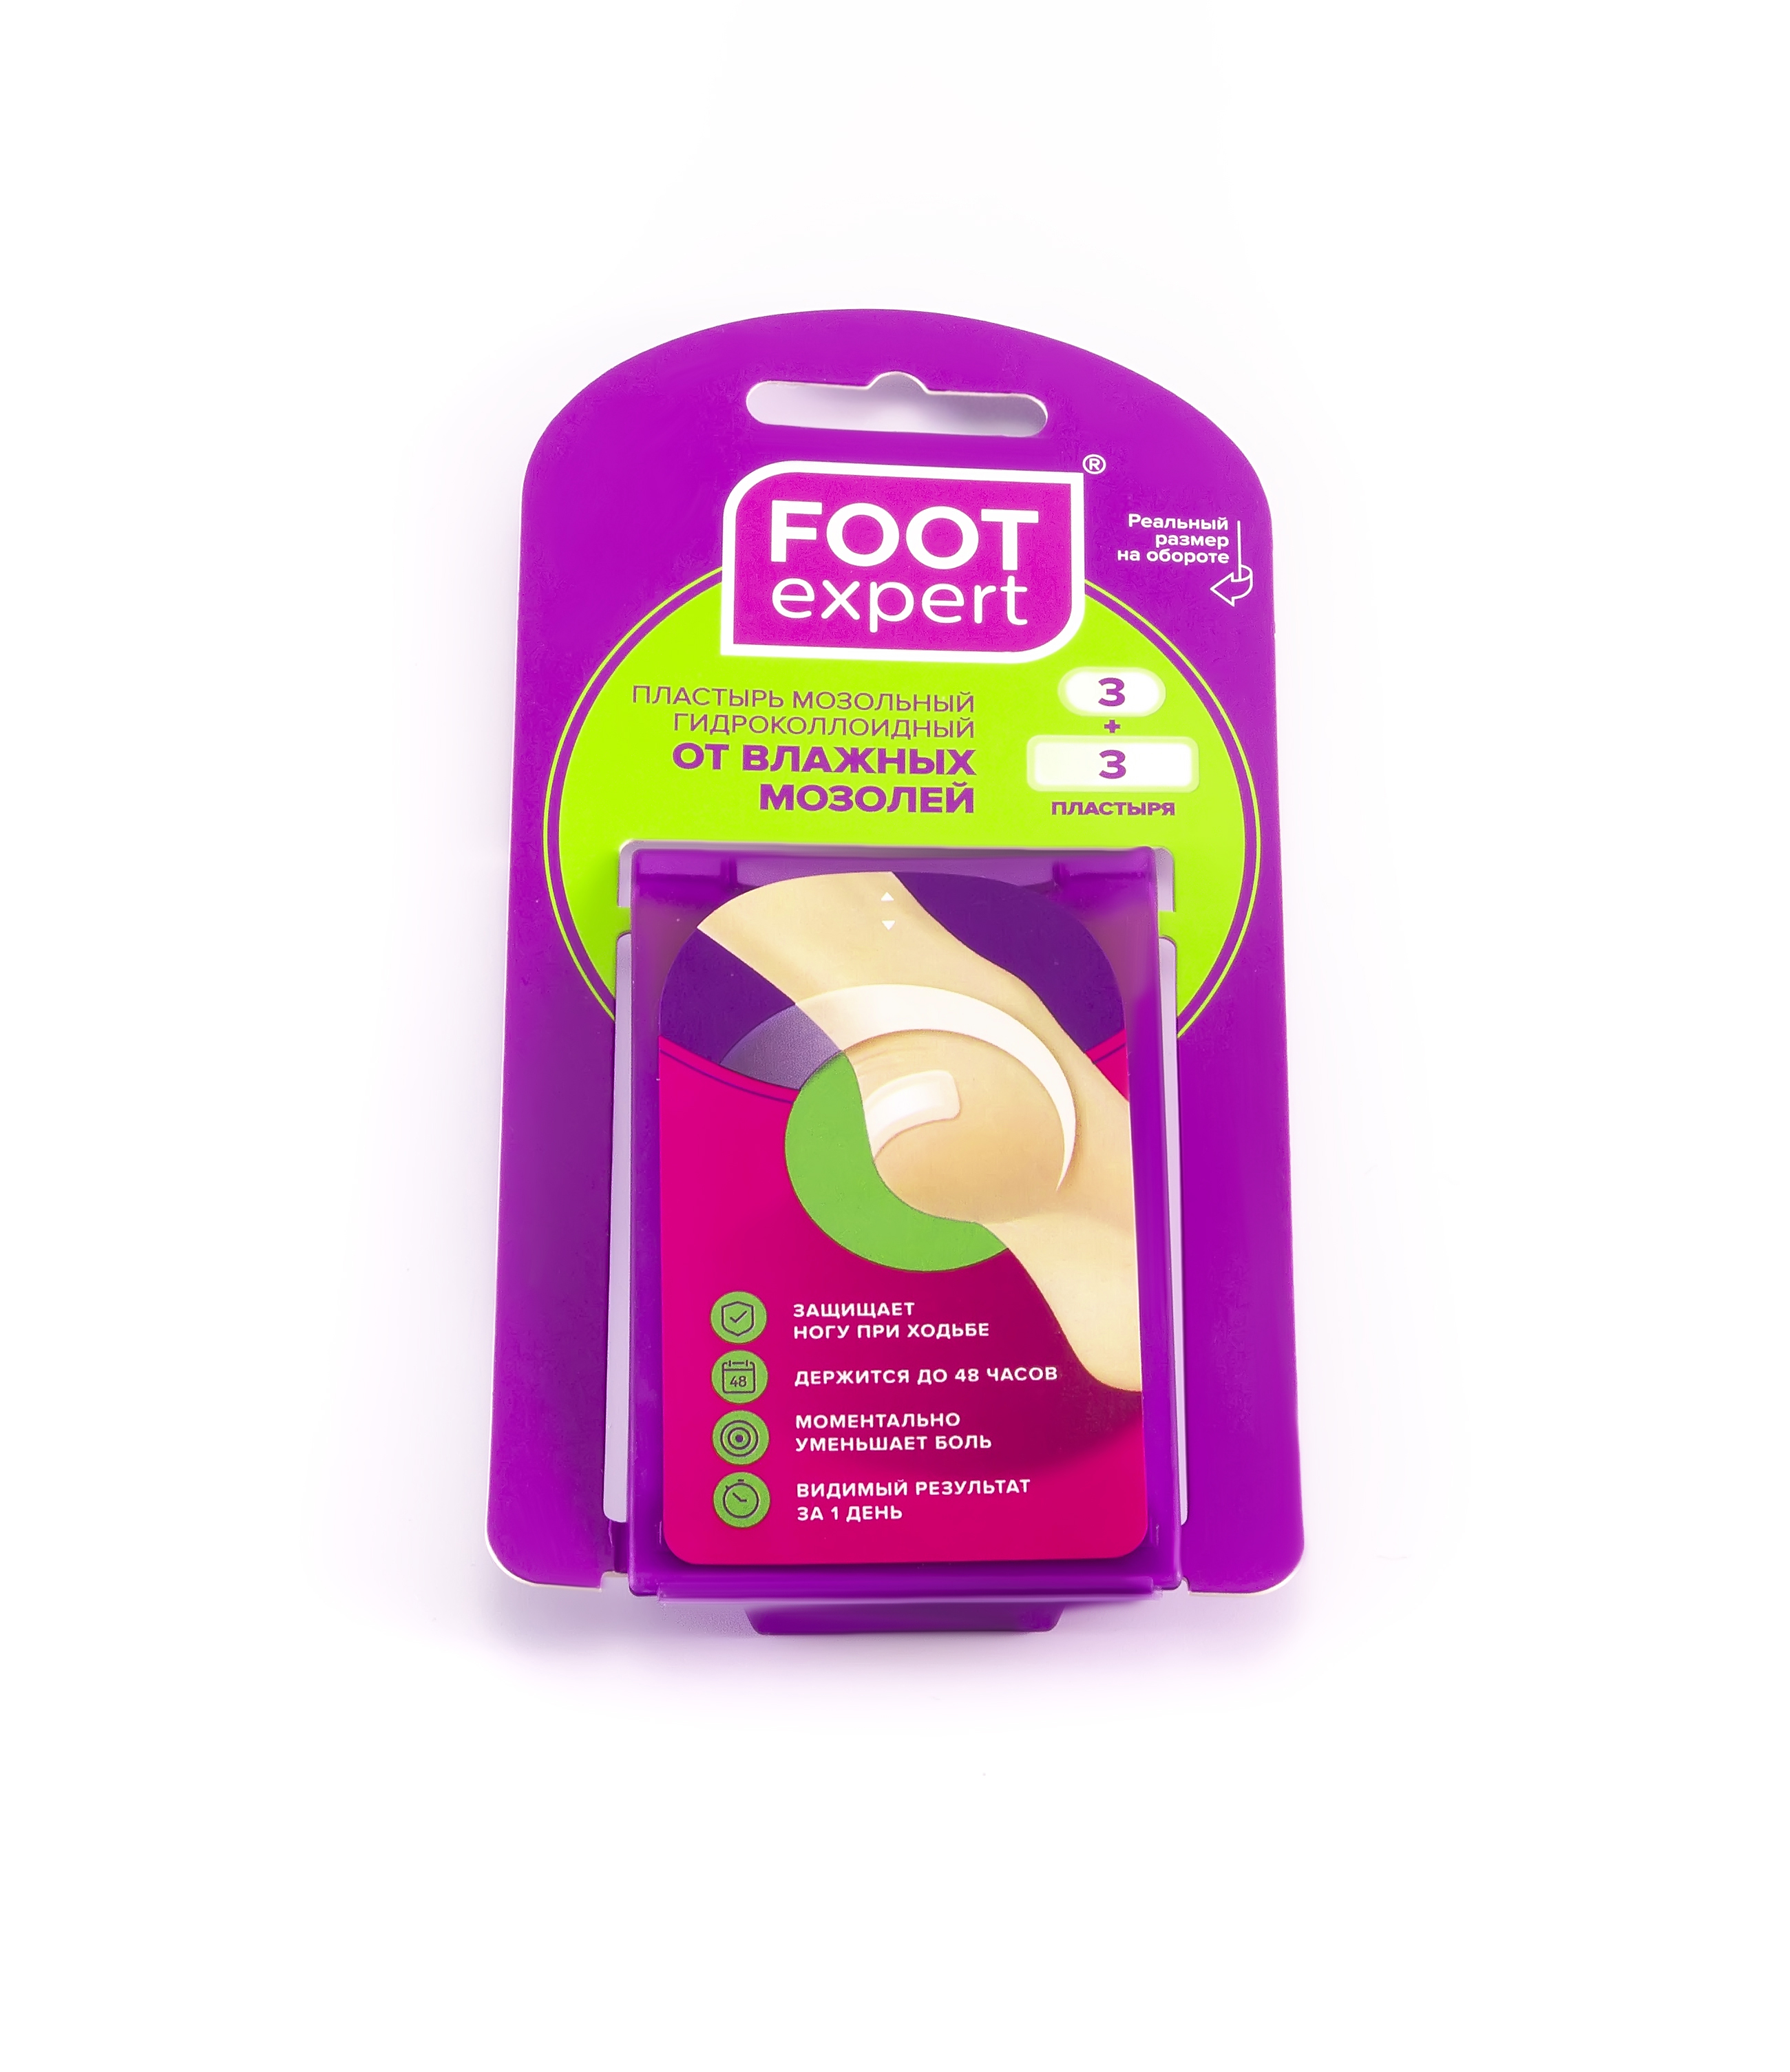 Купить FOOT EXPERT Гидроколлоидный НАБОР:2, 9х6, 0 cm., 3 шт. и 2, 2х4, 1 cm., 3 шт., Гидроколлоидные пластыри Foot Expert 2, 0 см 3 шт. + 2, 1 см 3 шт.